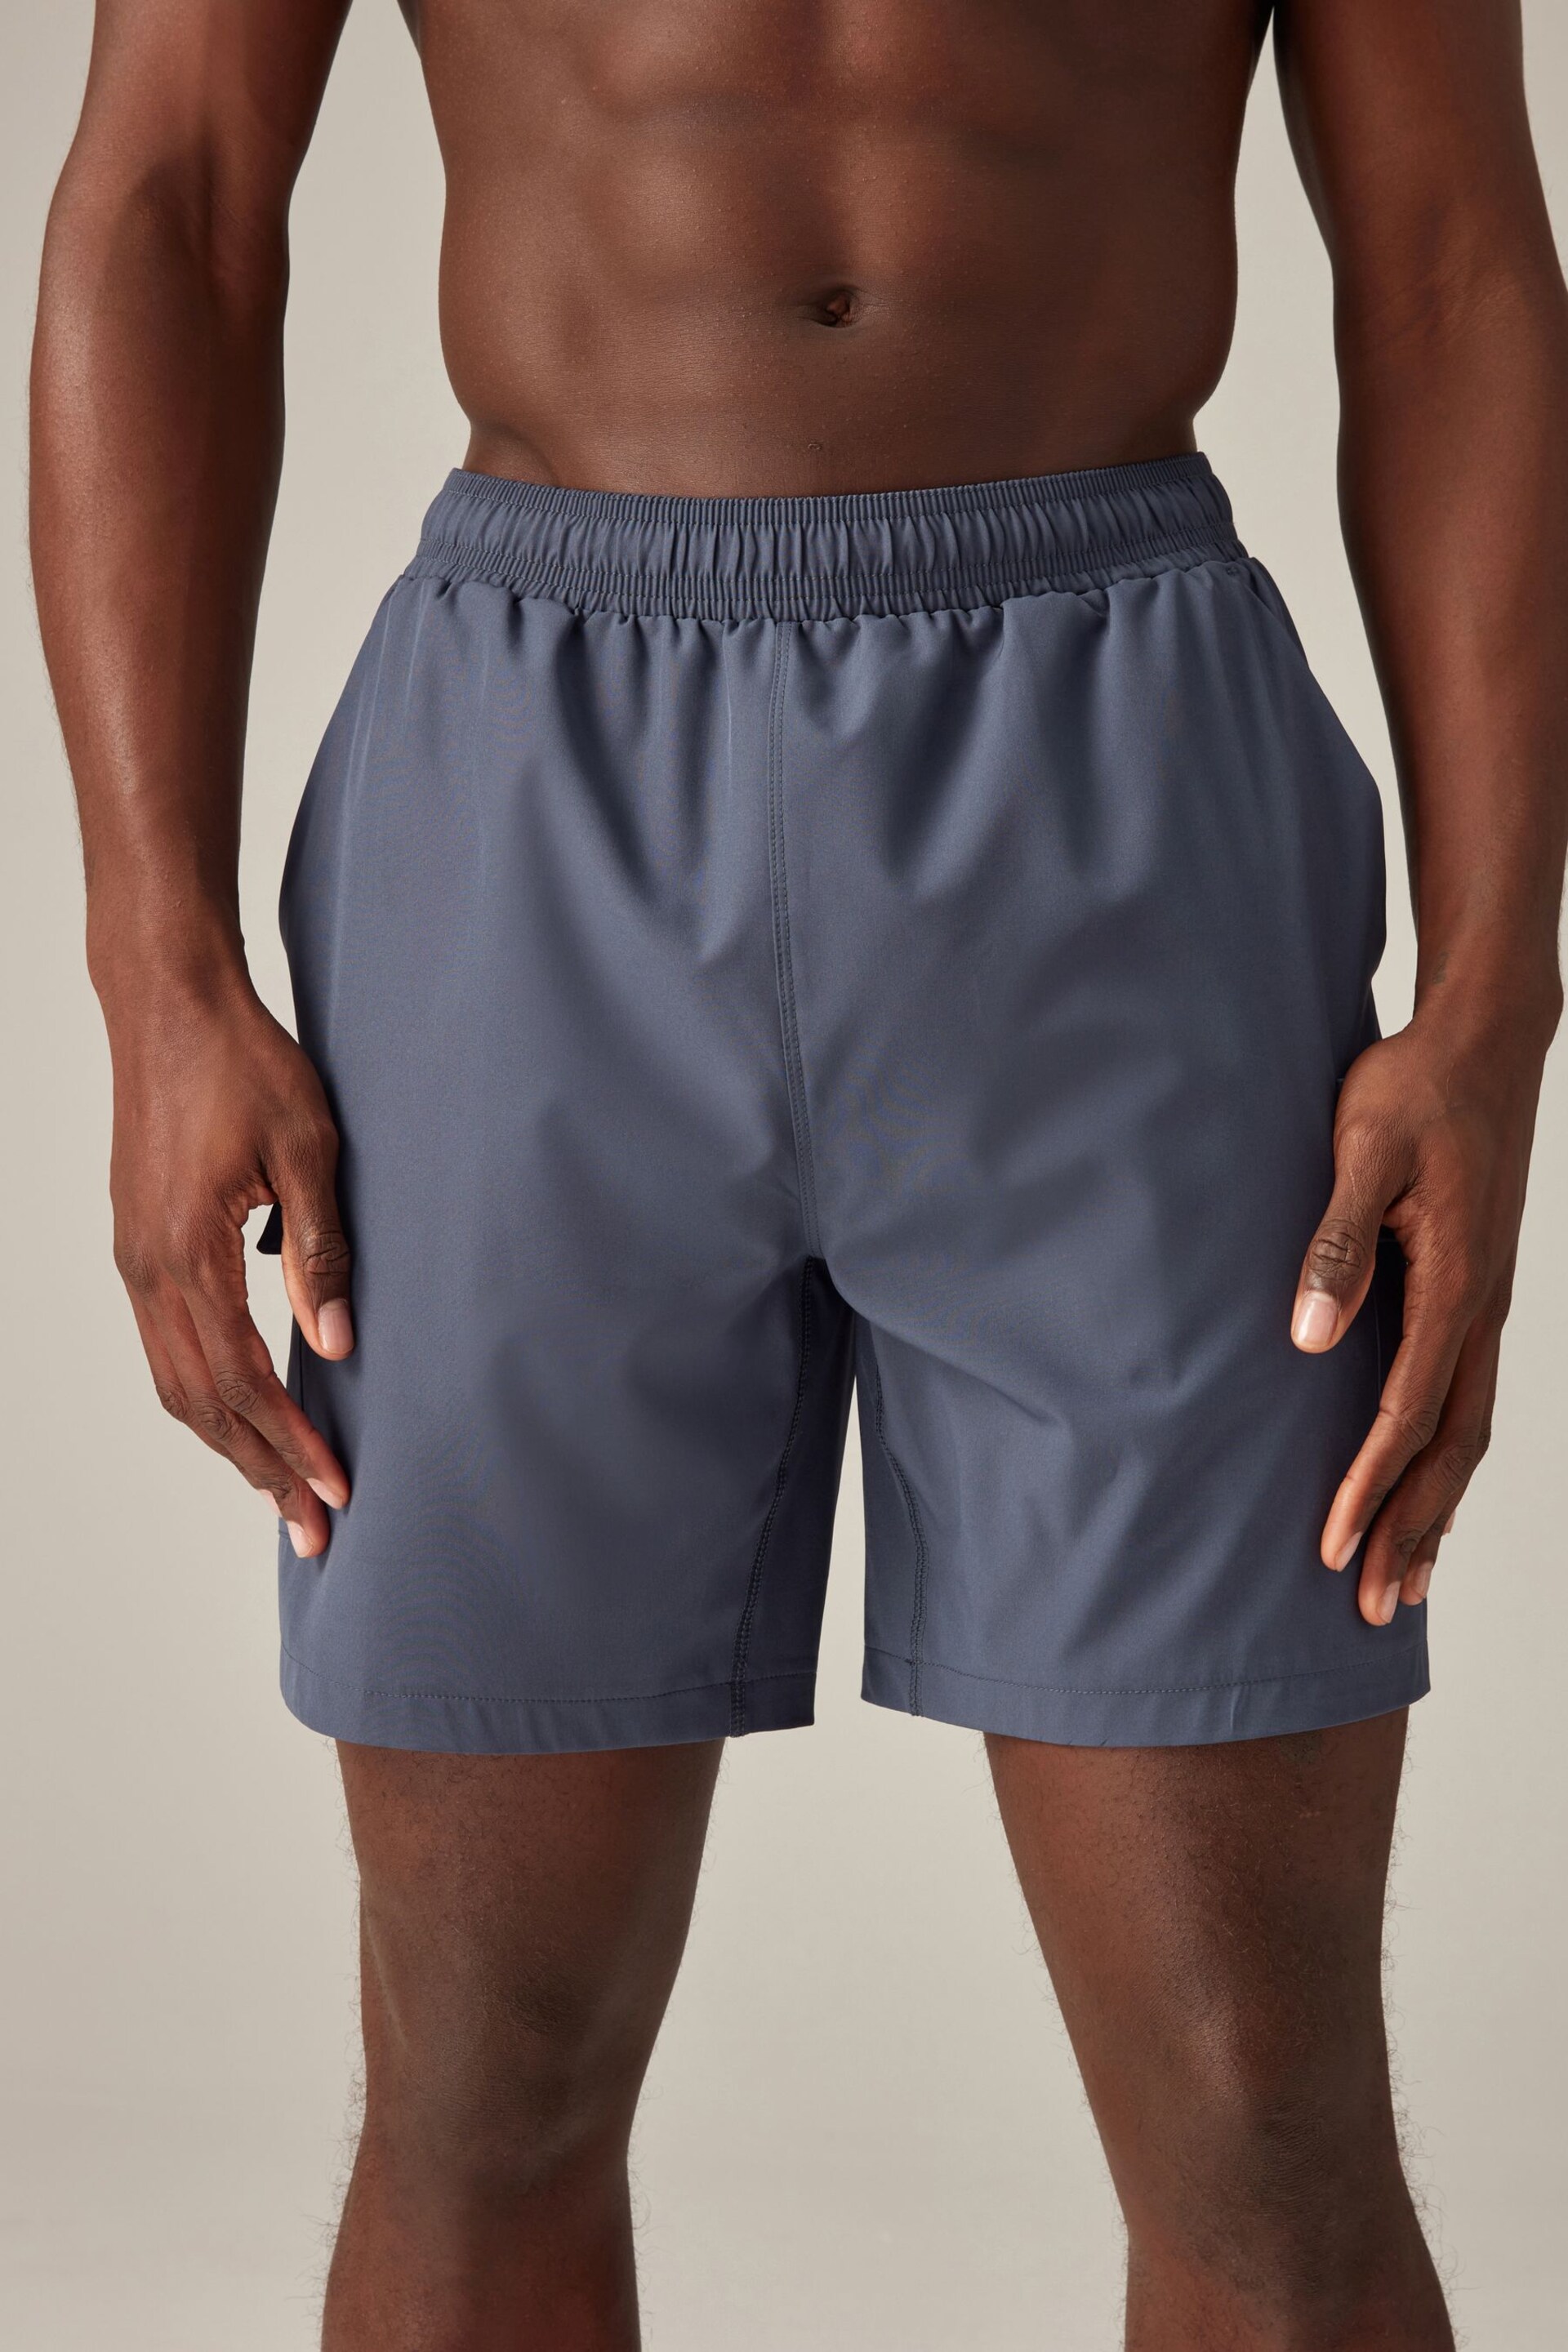 Blue Shorts Active Gym Sports Shorts - Image 4 of 11